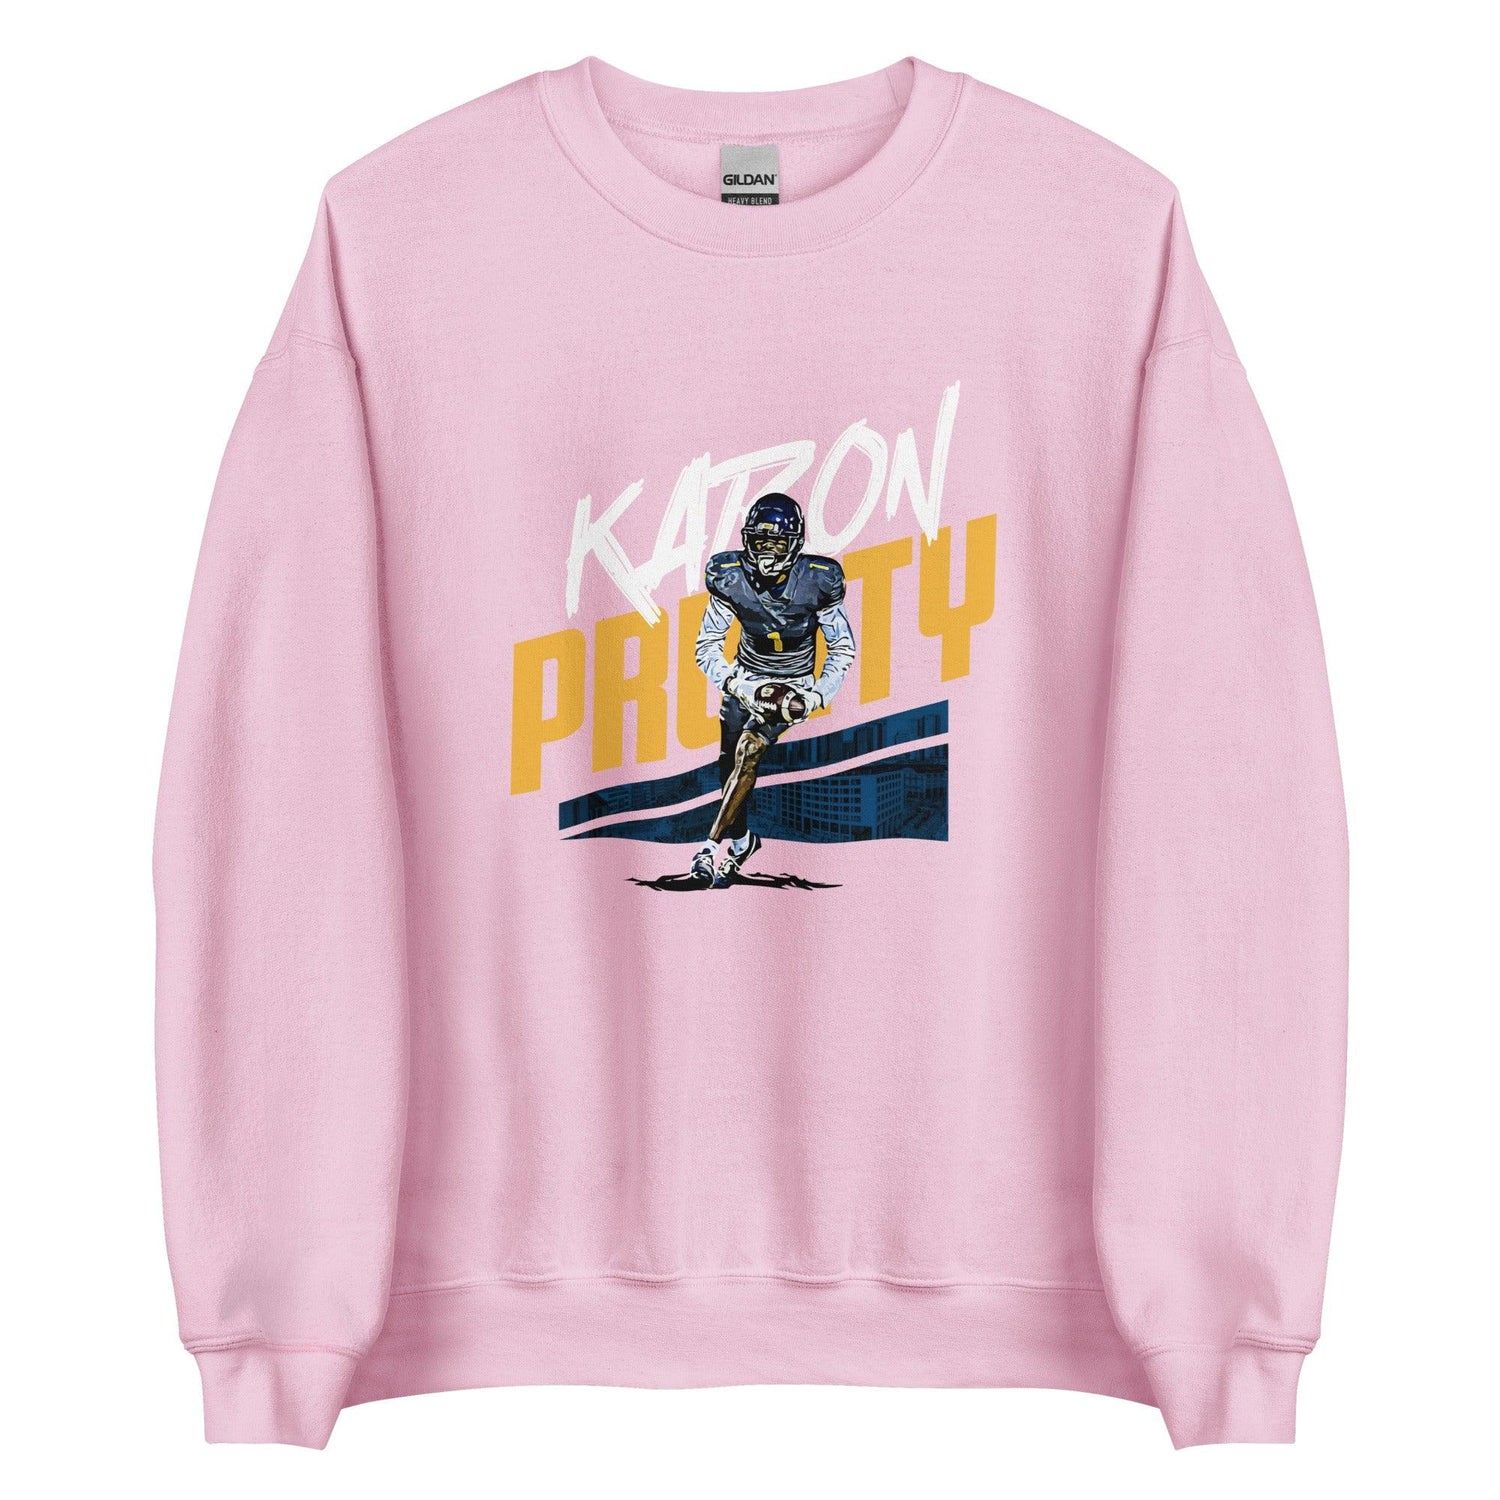 Karon Prunty "Gameday" Sweatshirt - Fan Arch